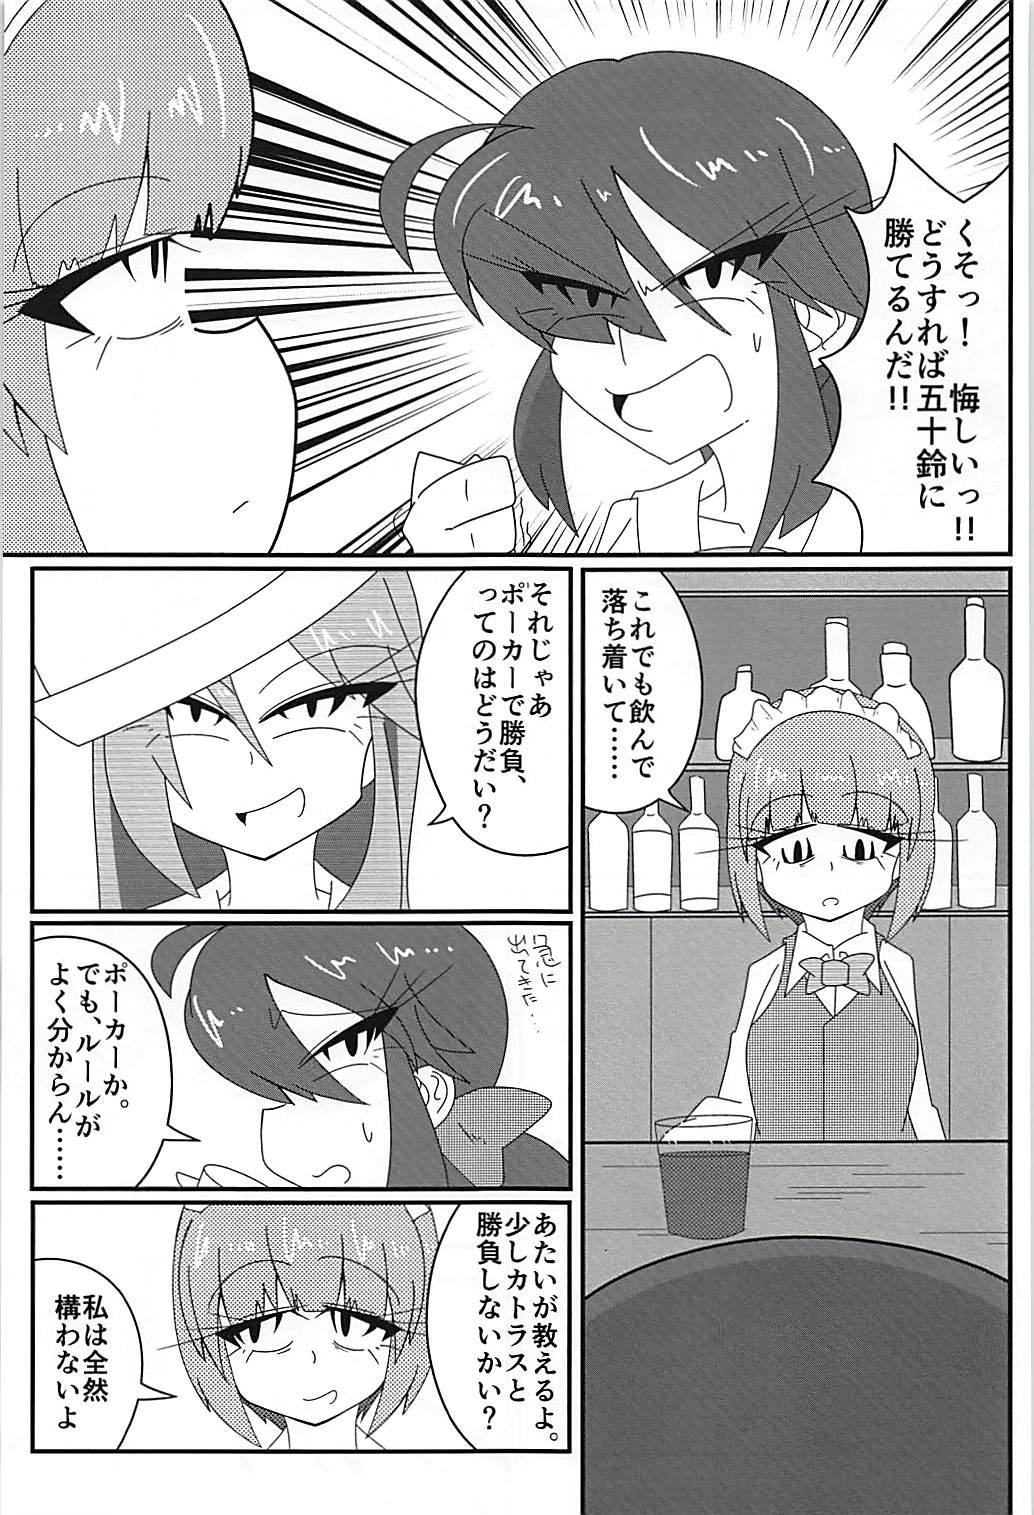 Aunty Arakuremono no Leader, Haiboku! - Girls und panzer Roundass - Page 2